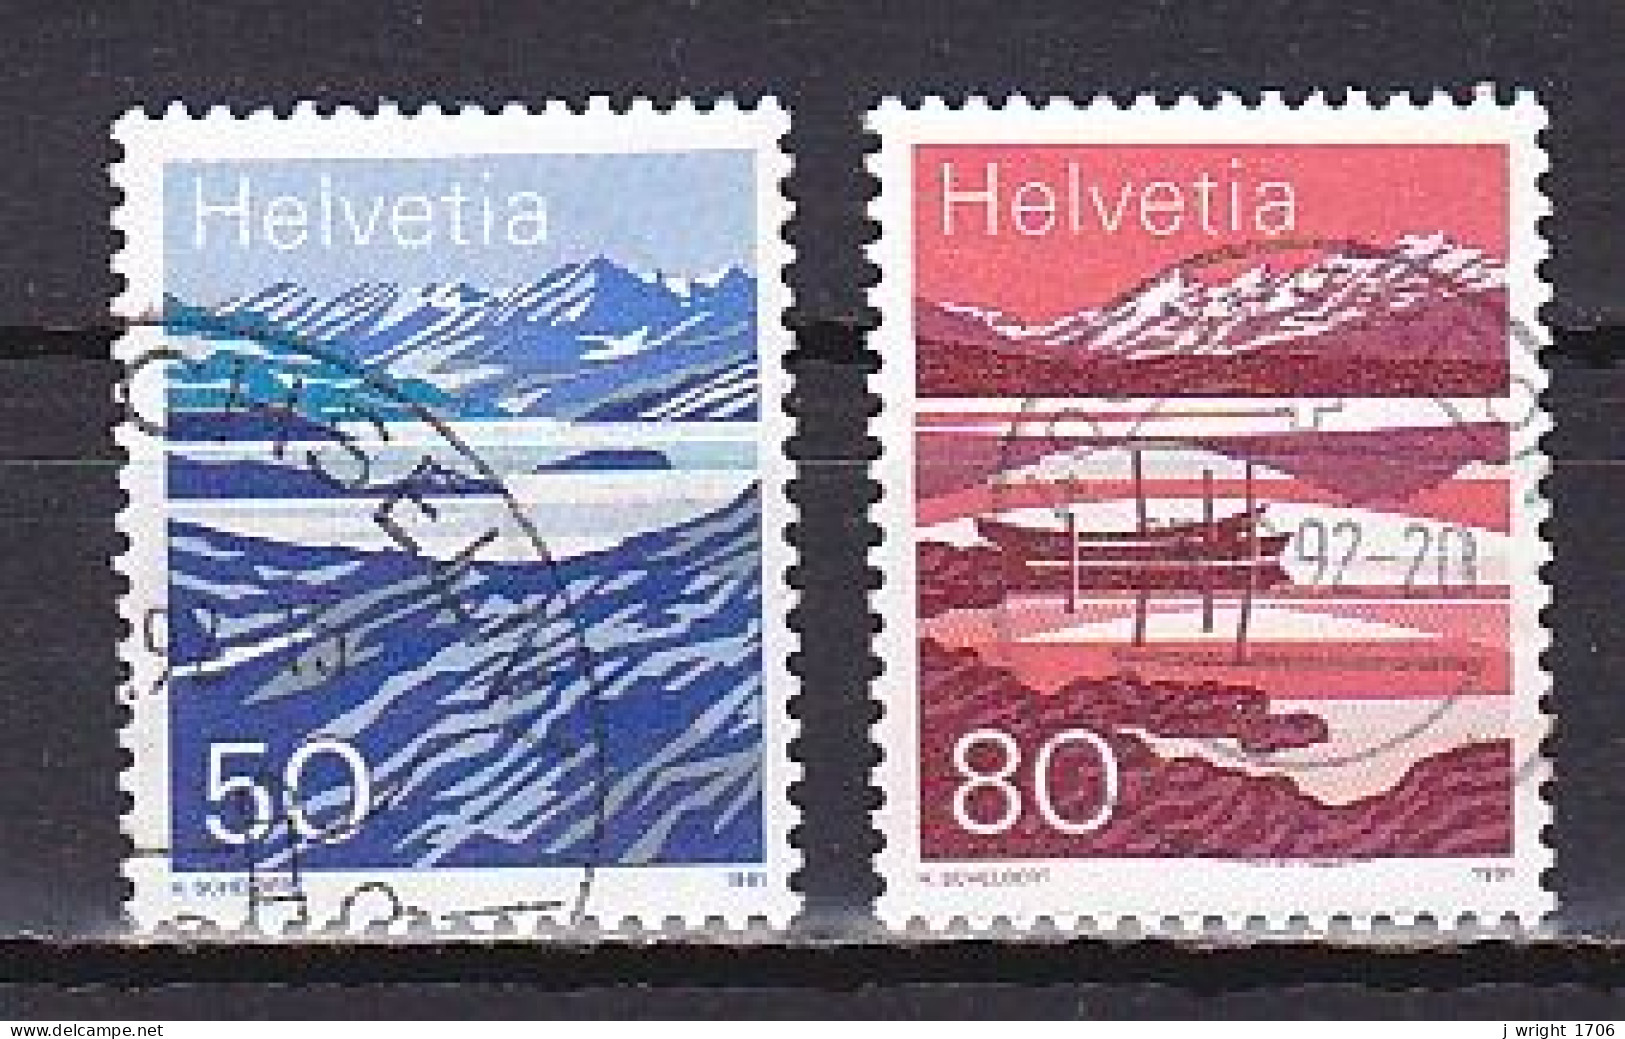 Switzerland, 1991, Lake Moesola & Melchsee, 50c & 80c, USED - Usados